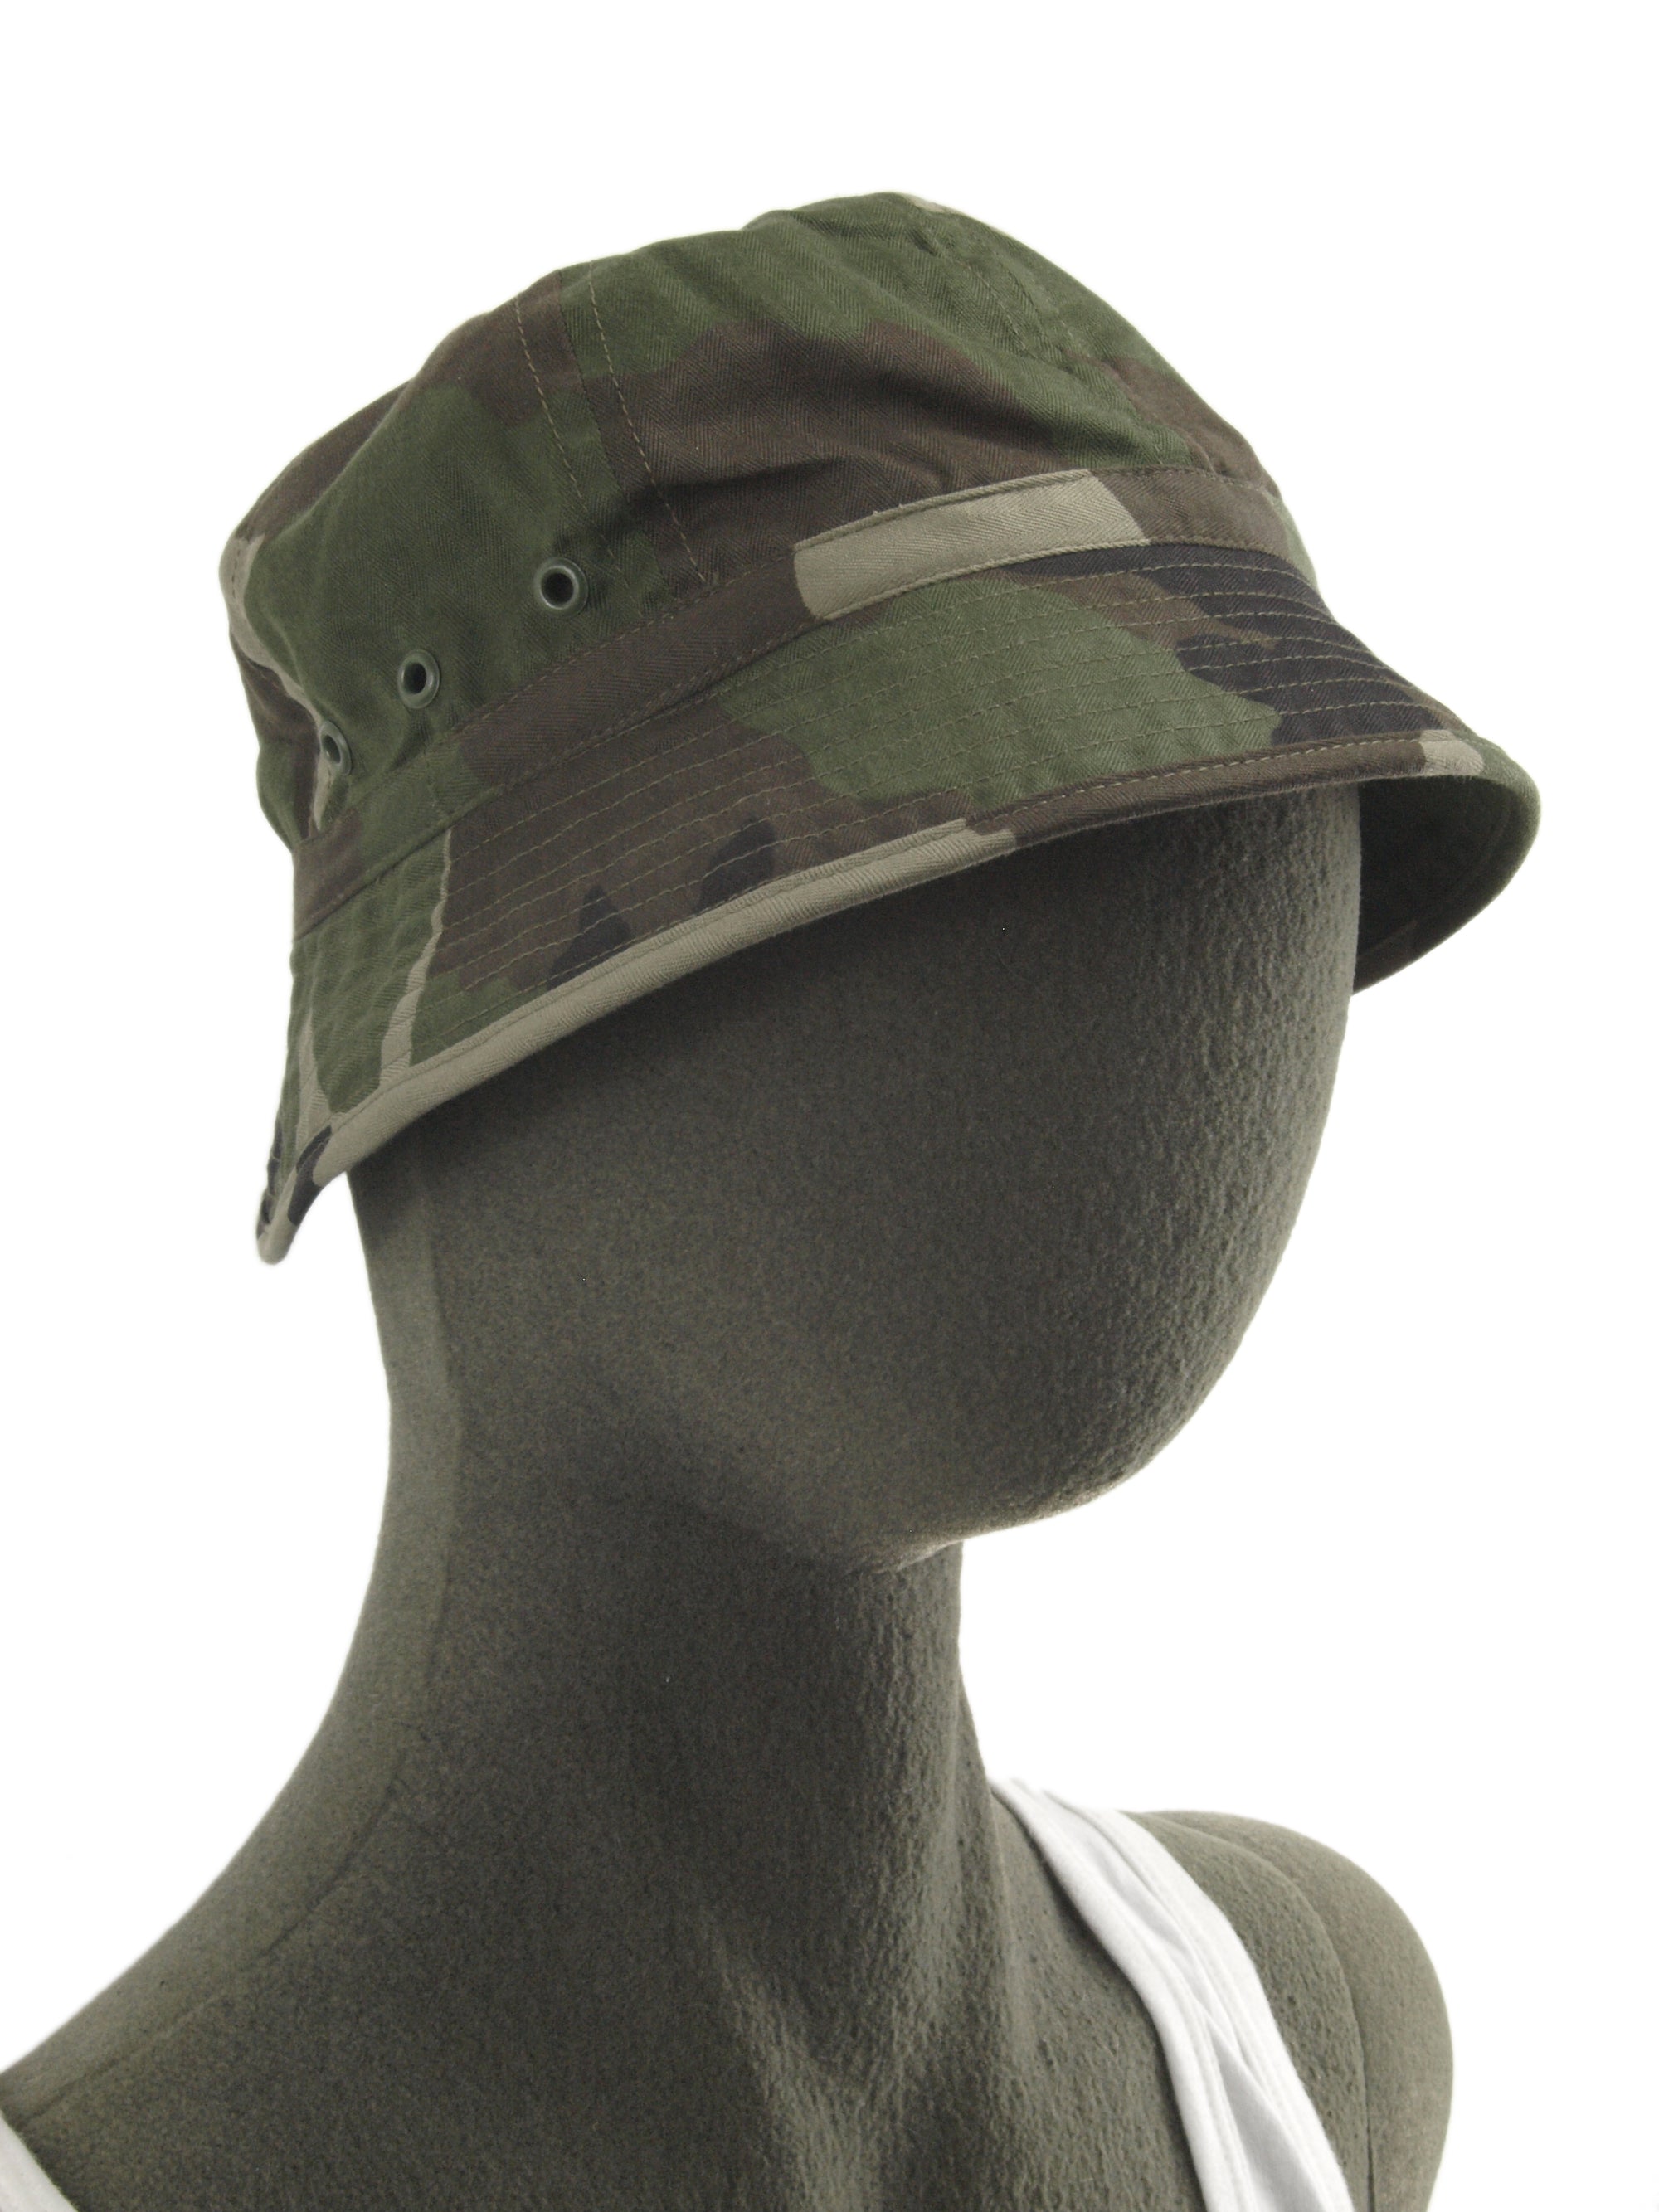 French Army Camo CCE Woodland bush hat